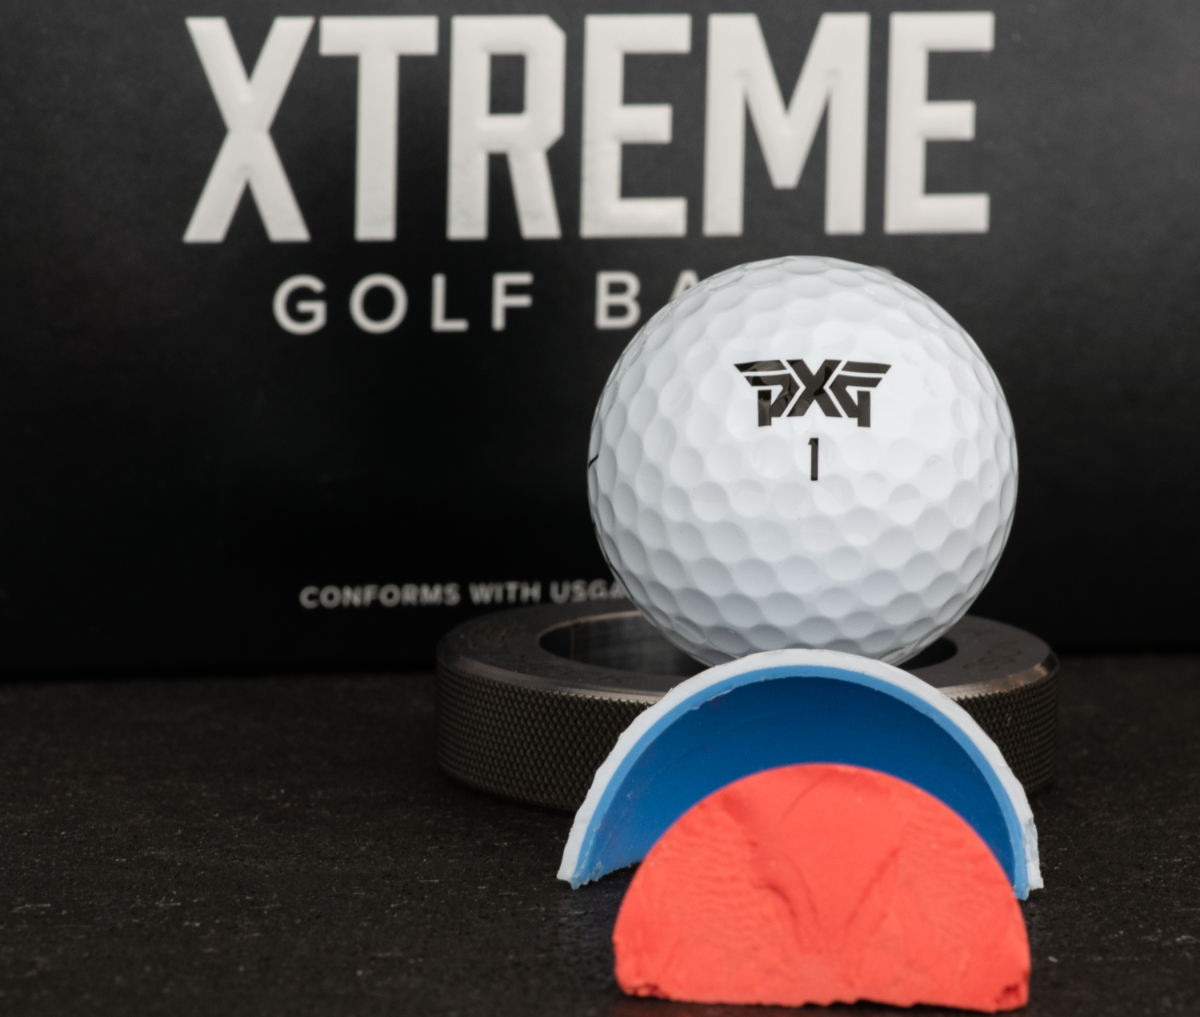 PXG_Xtreme_Golf_Ball_ftr-1.png